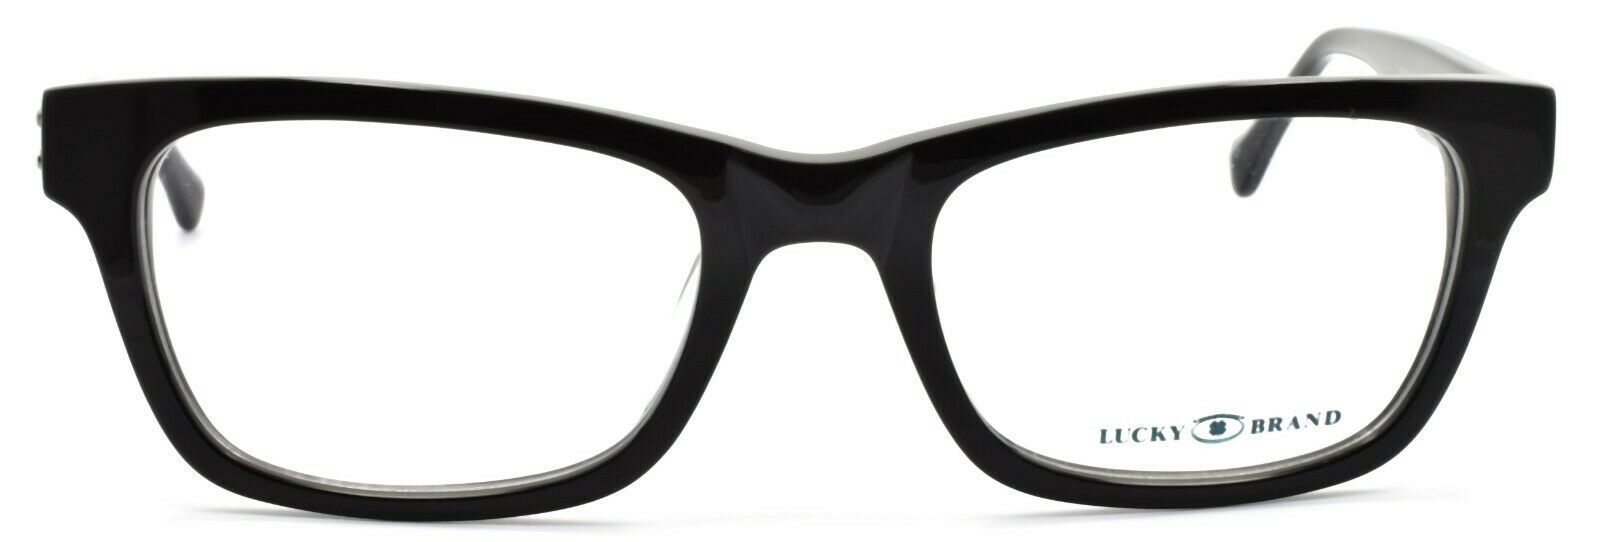 2-LUCKY BRAND Tropic UF Women's Eyeglasses Frames 52-20-140 Black + CASE-751286247978-IKSpecs